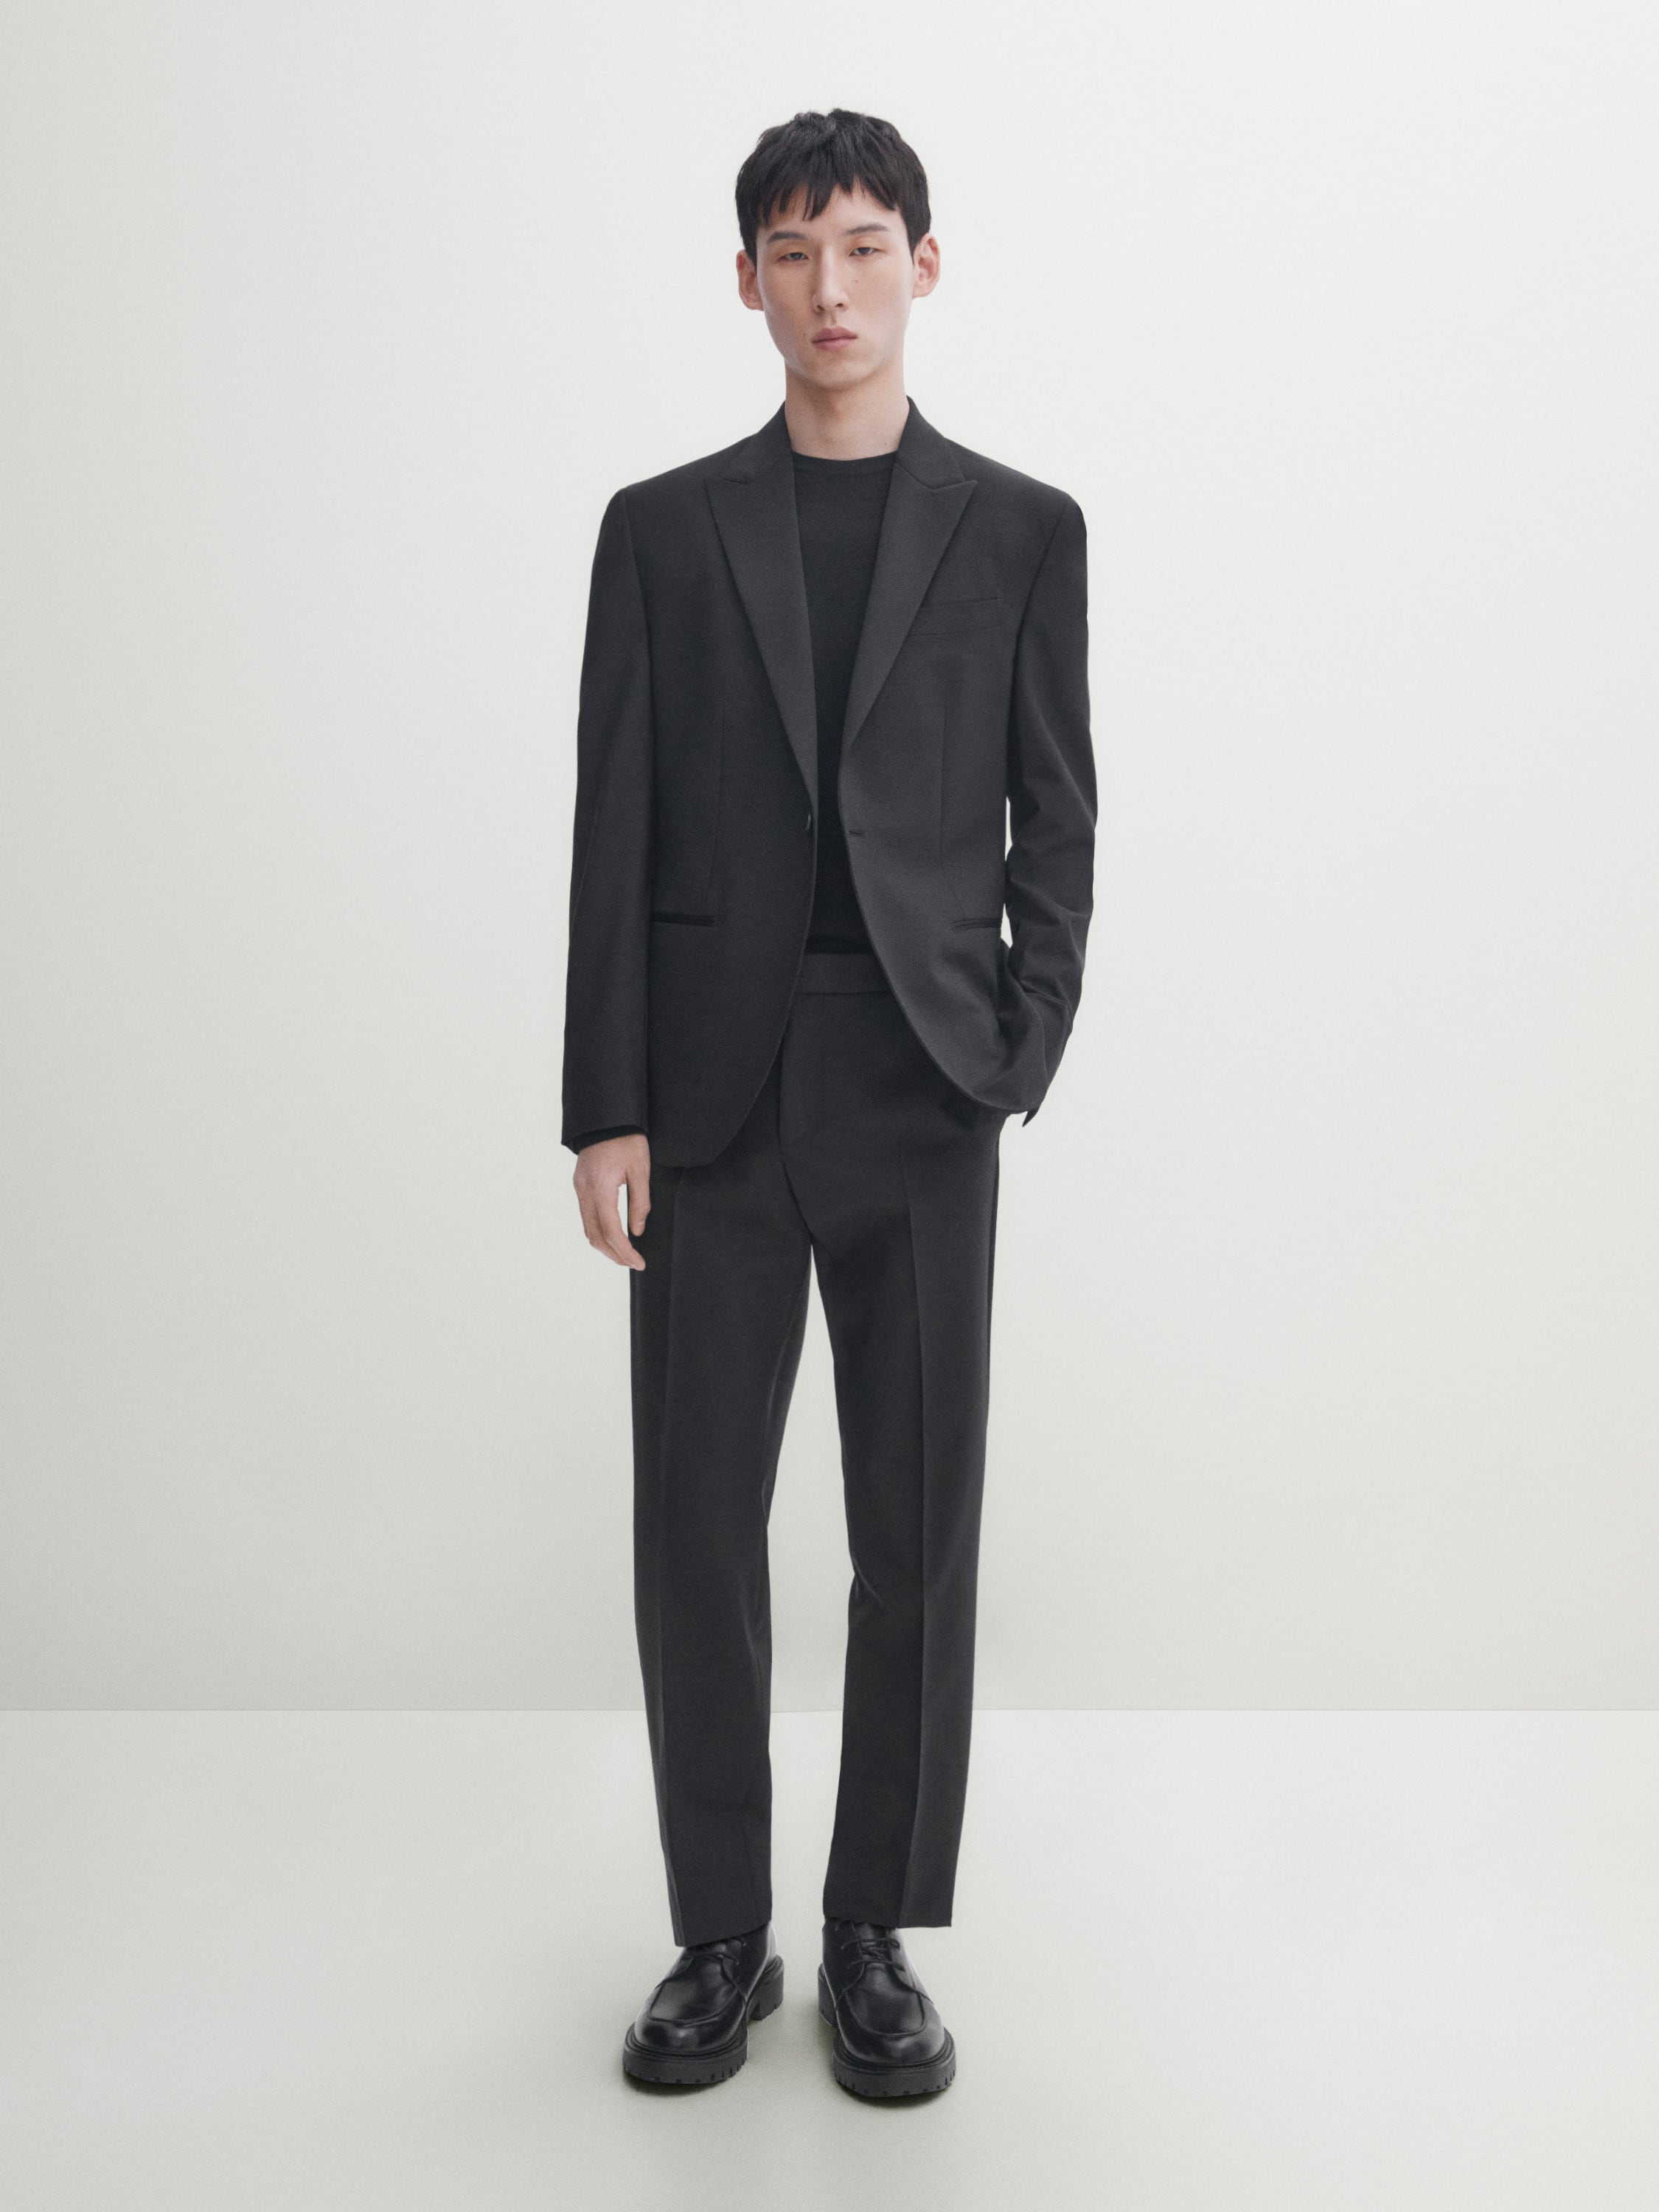 Black tuxedo suit blazer